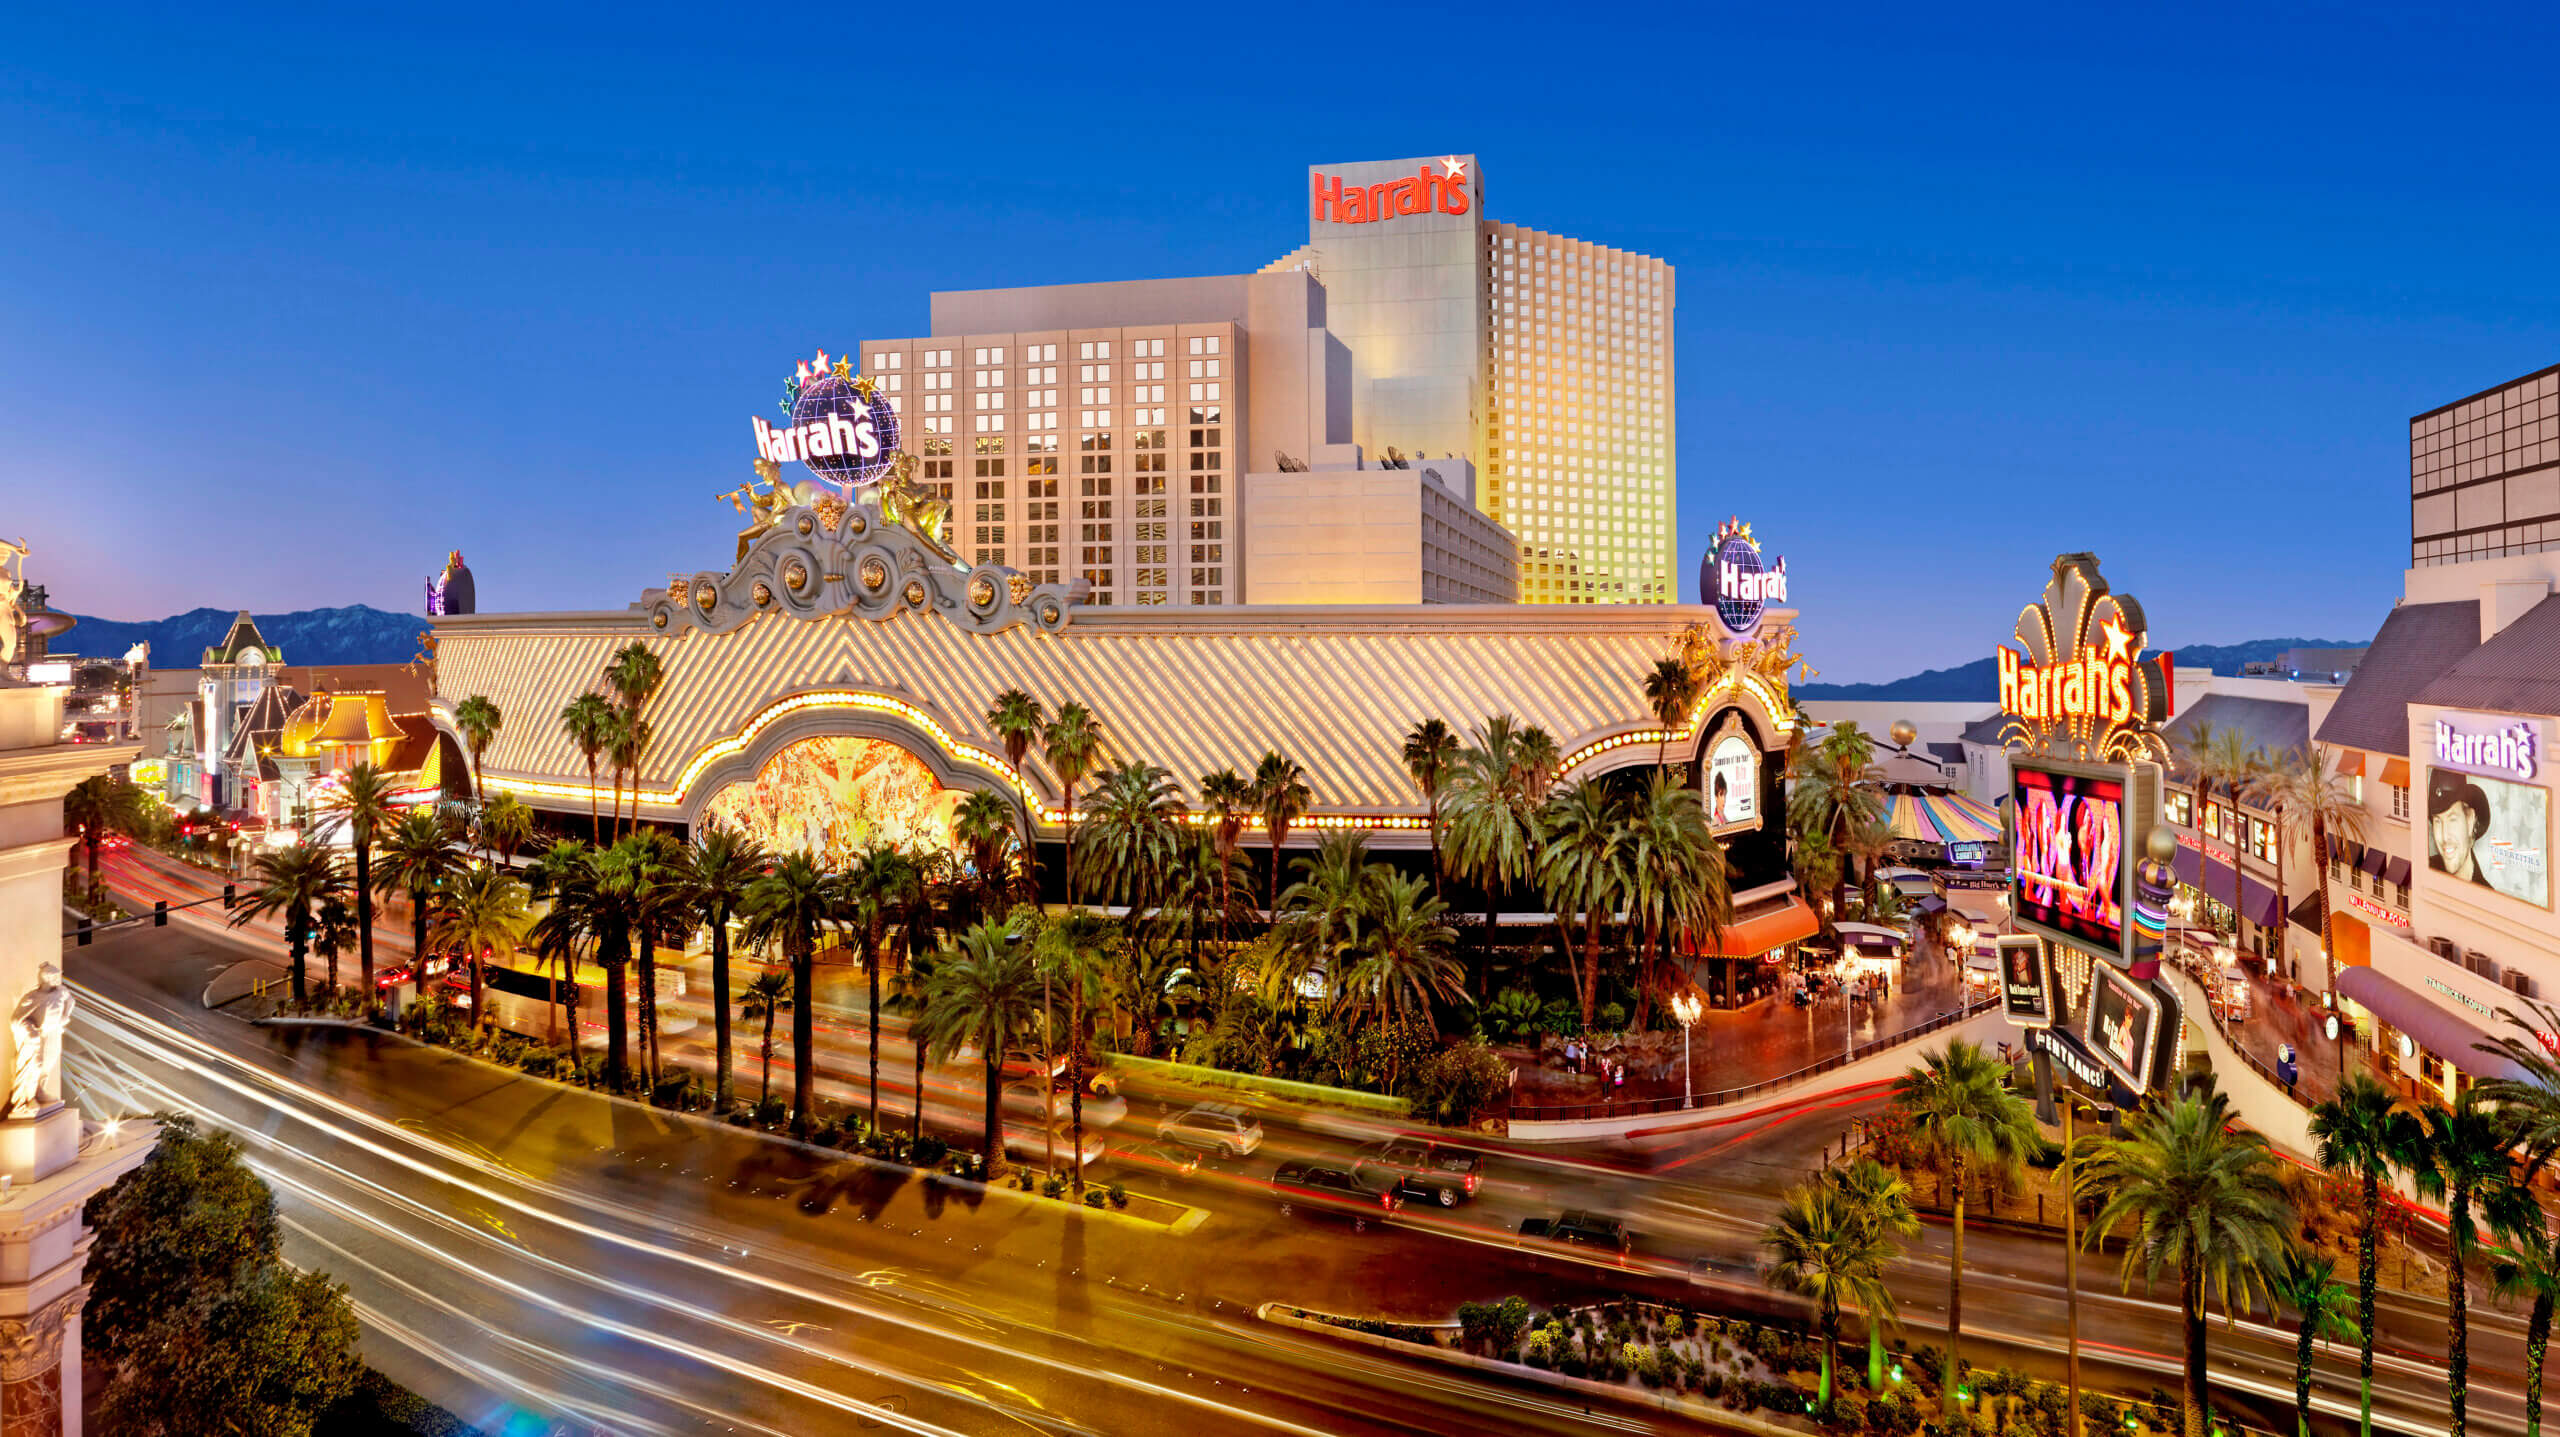 Harrah’s Las Vegas Hotel and Casino